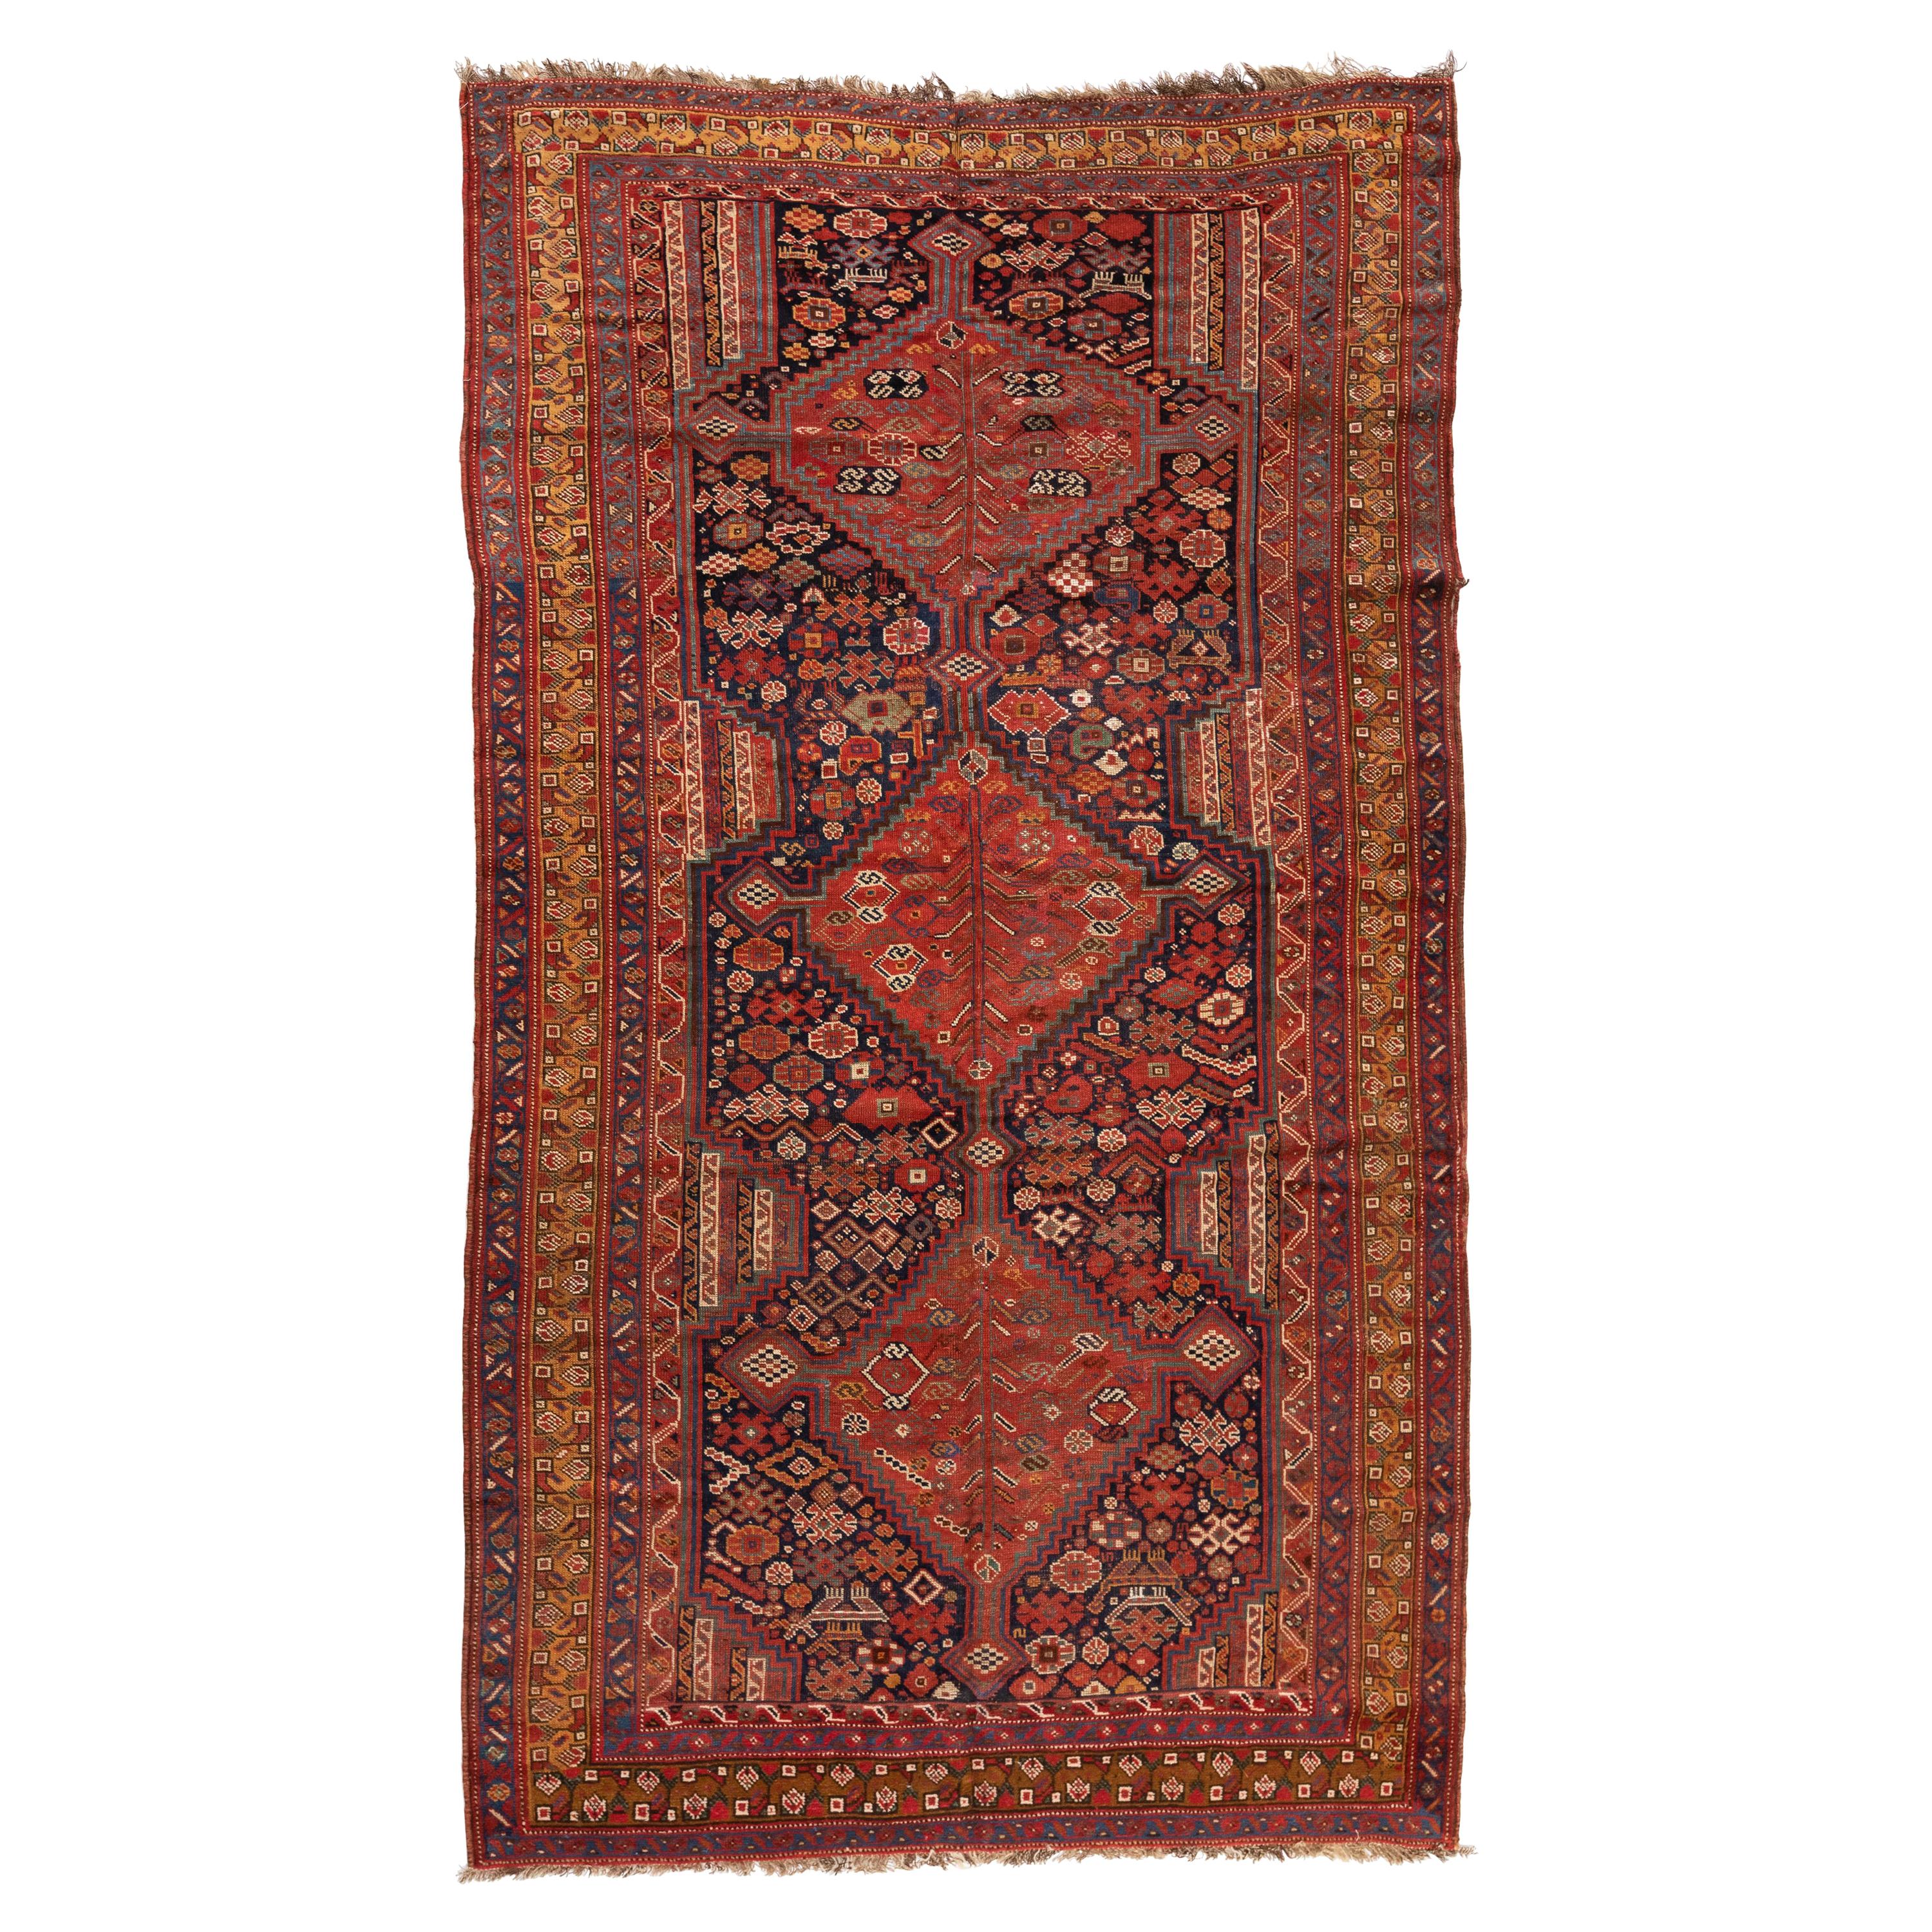 Antique Red Persian Khamseh Geometric Rug, circa 1920s-1930s For Sale